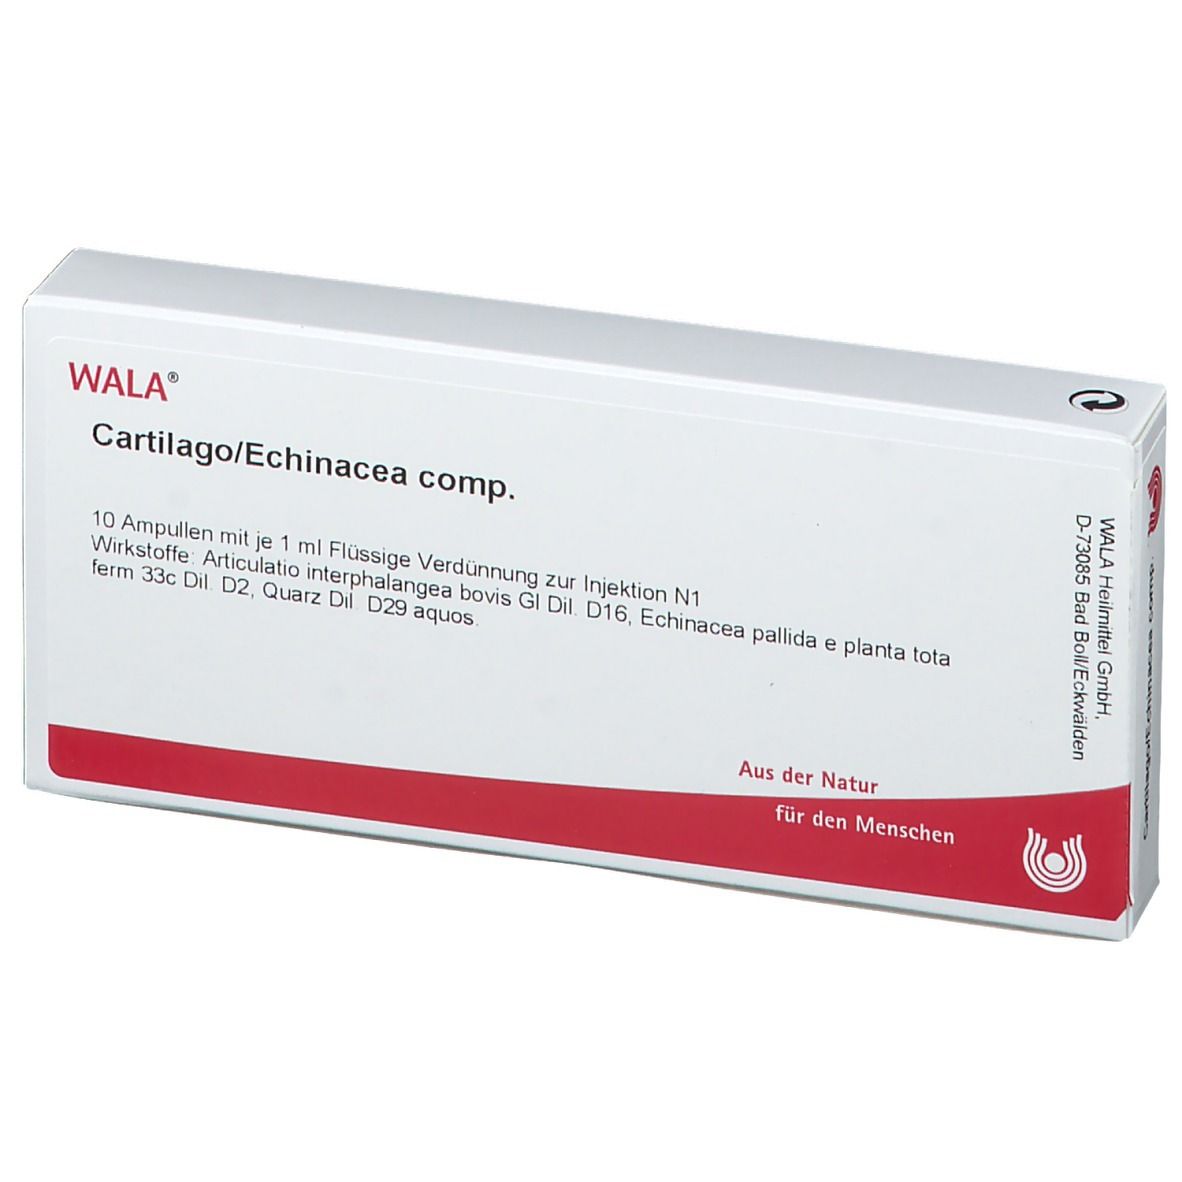 WALA® CARTILAGO/ Echinacea Comp. Amp.